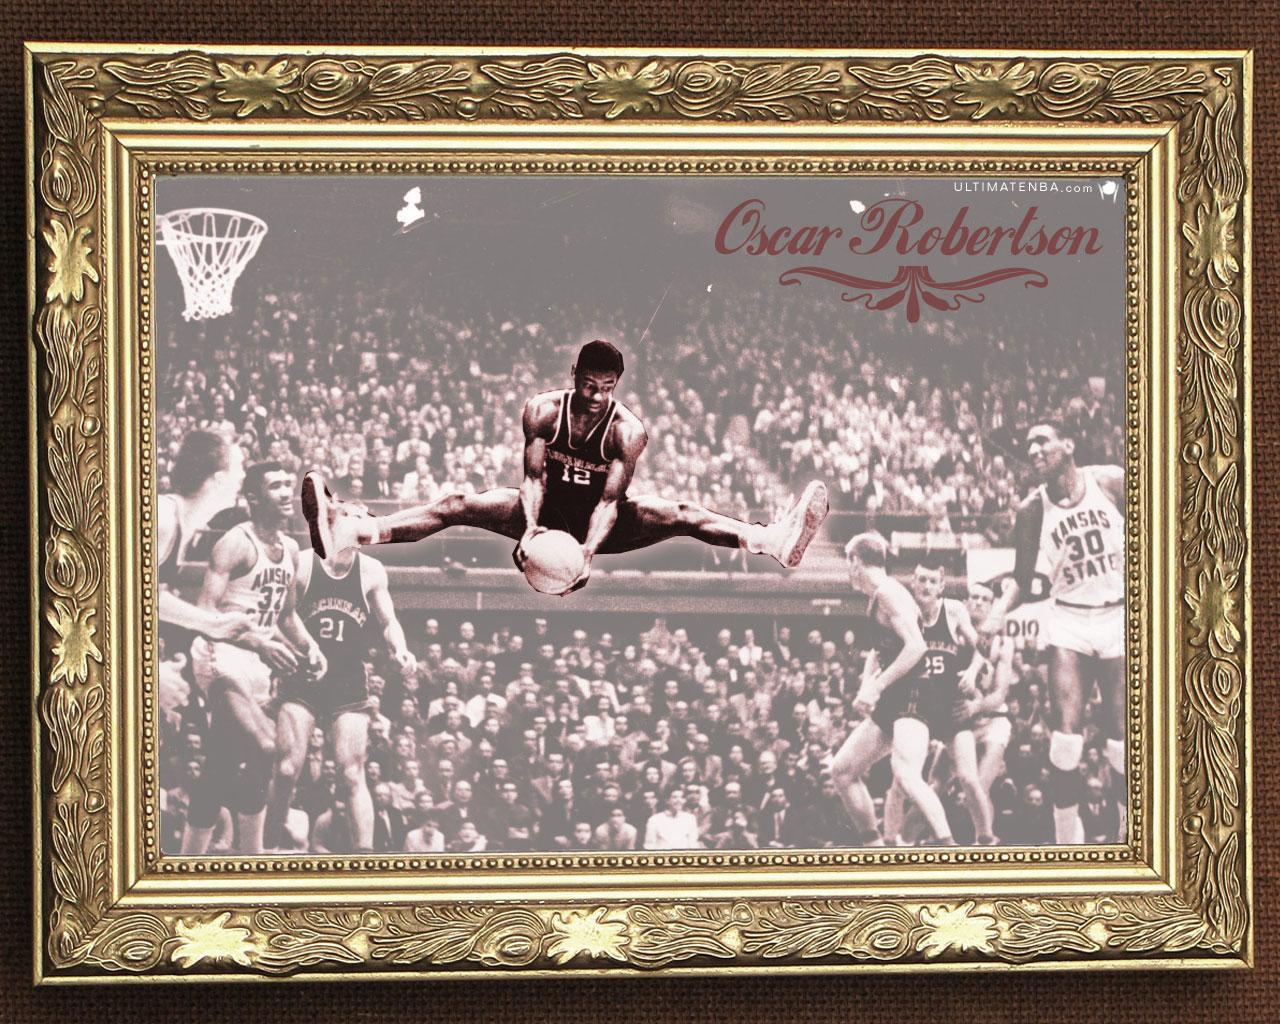 Oscar Robertson 1280×1024 Wallpaper. Basketball Wallpaper at